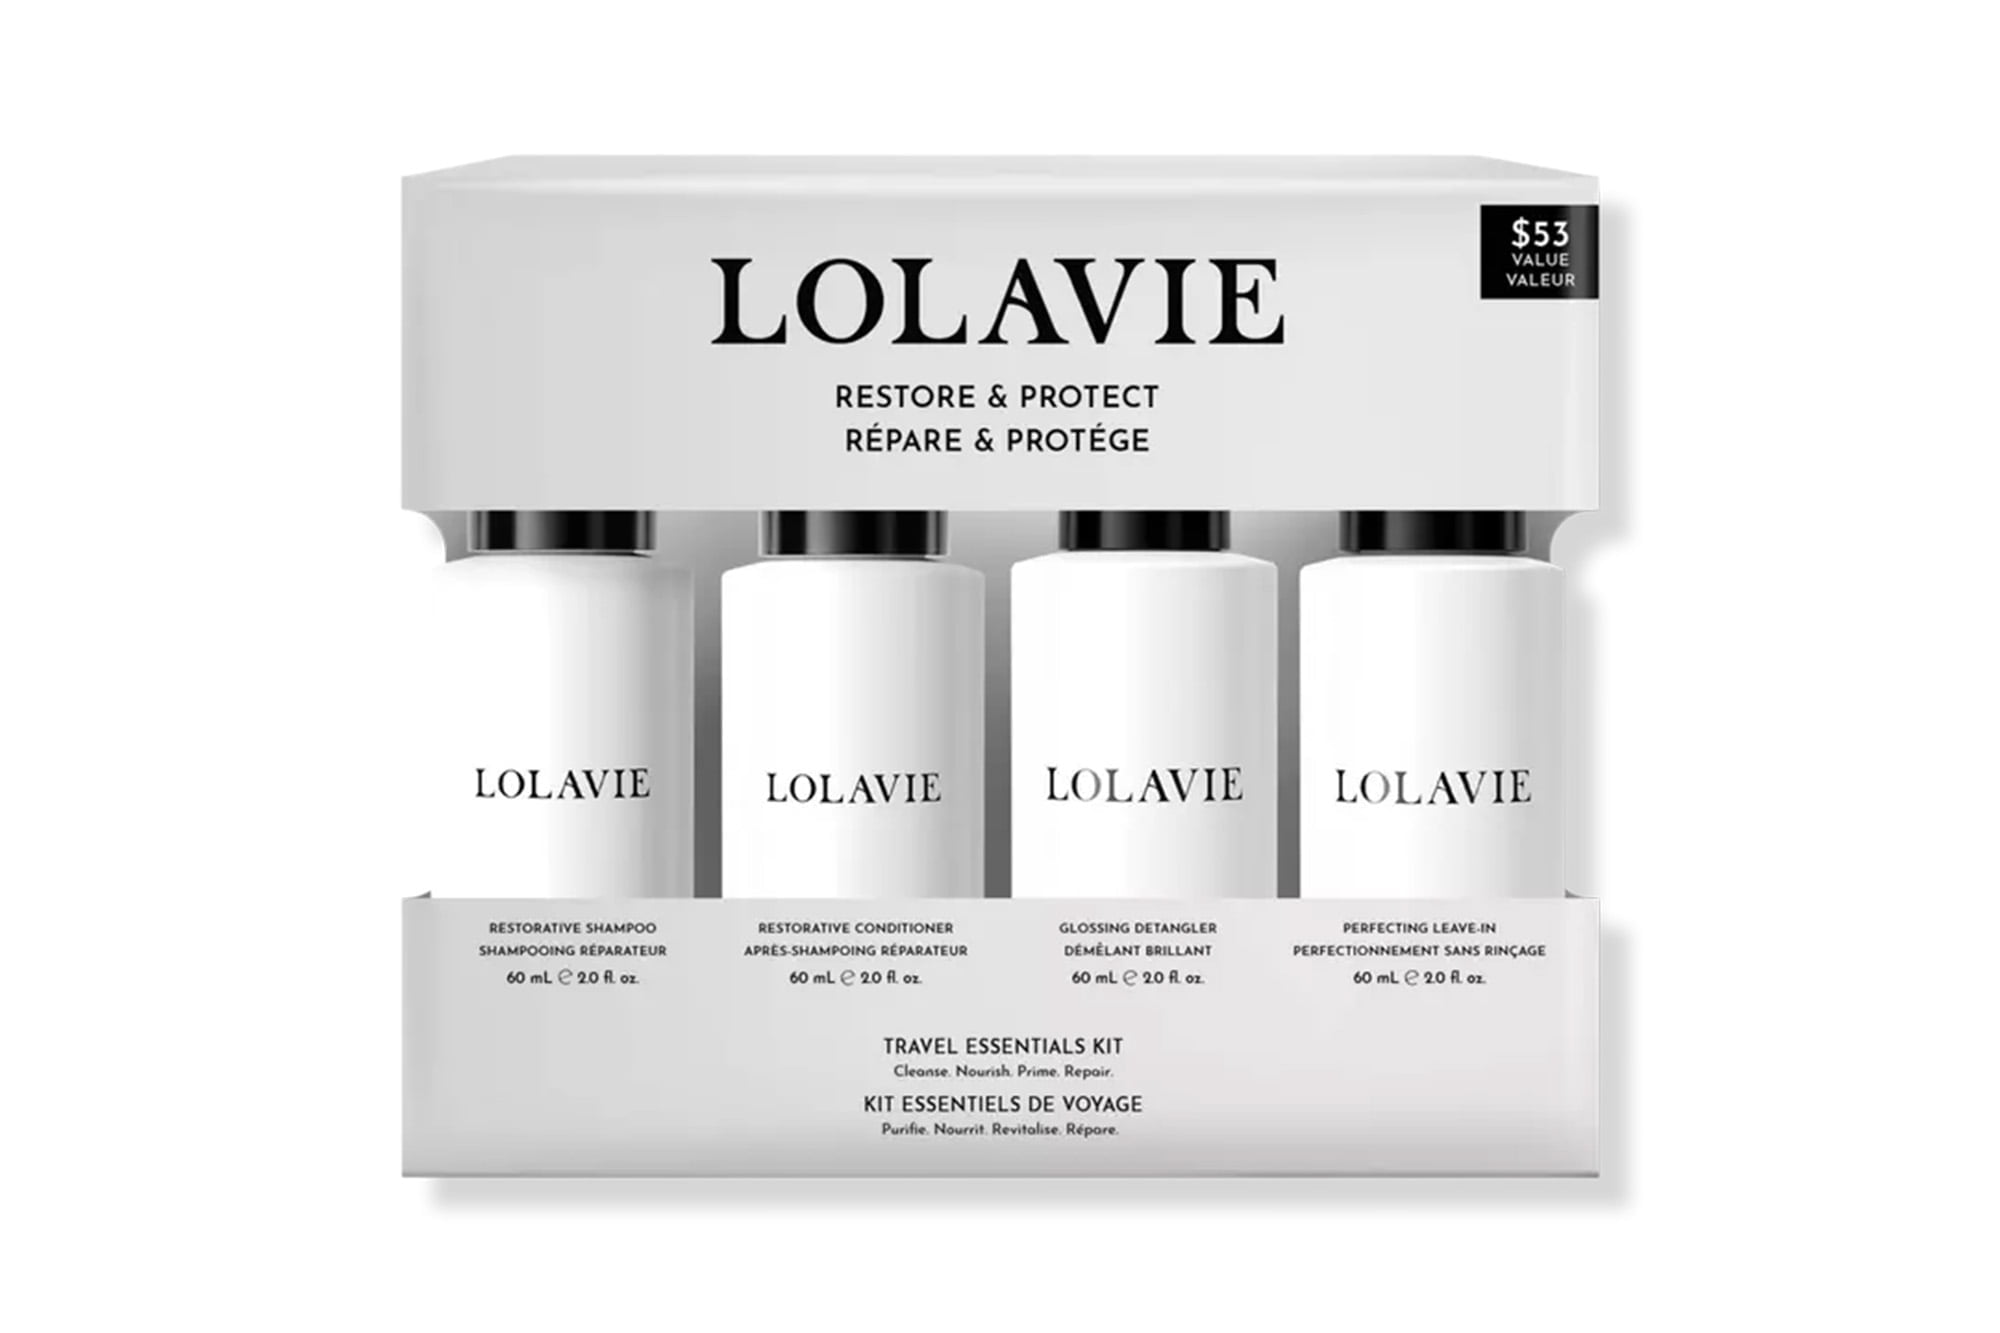 A Lolavie travel set